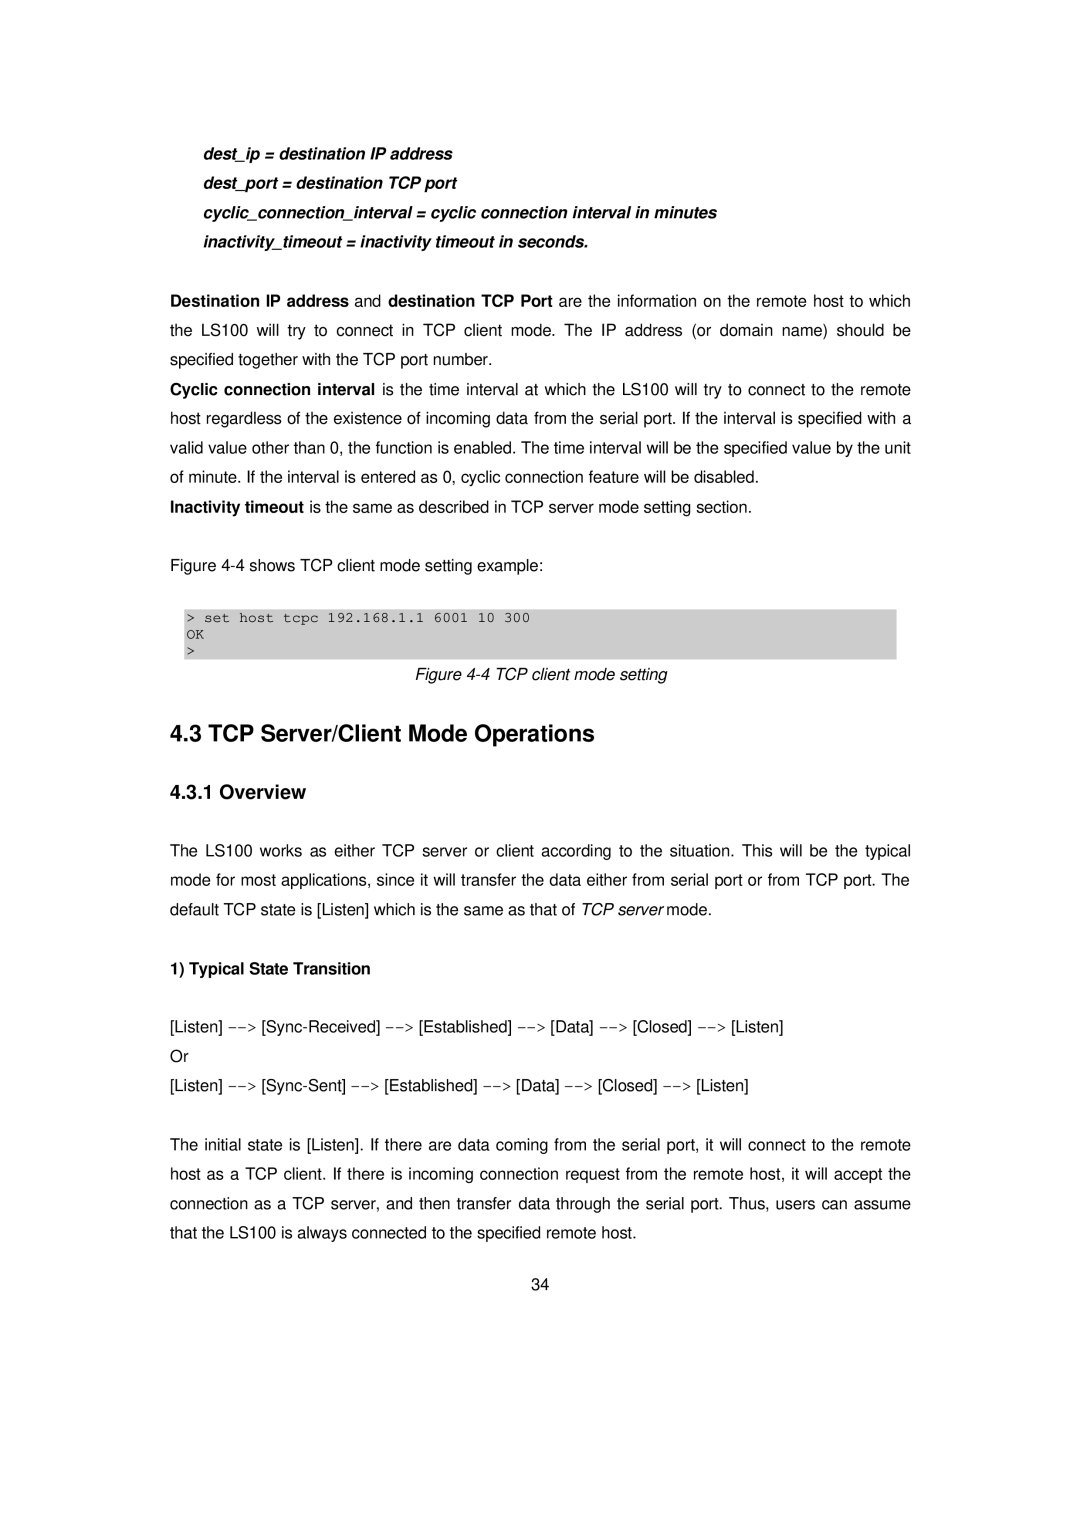 Senatek LS100 manual TCP Server/Client Mode Operations, TCP client mode setting 